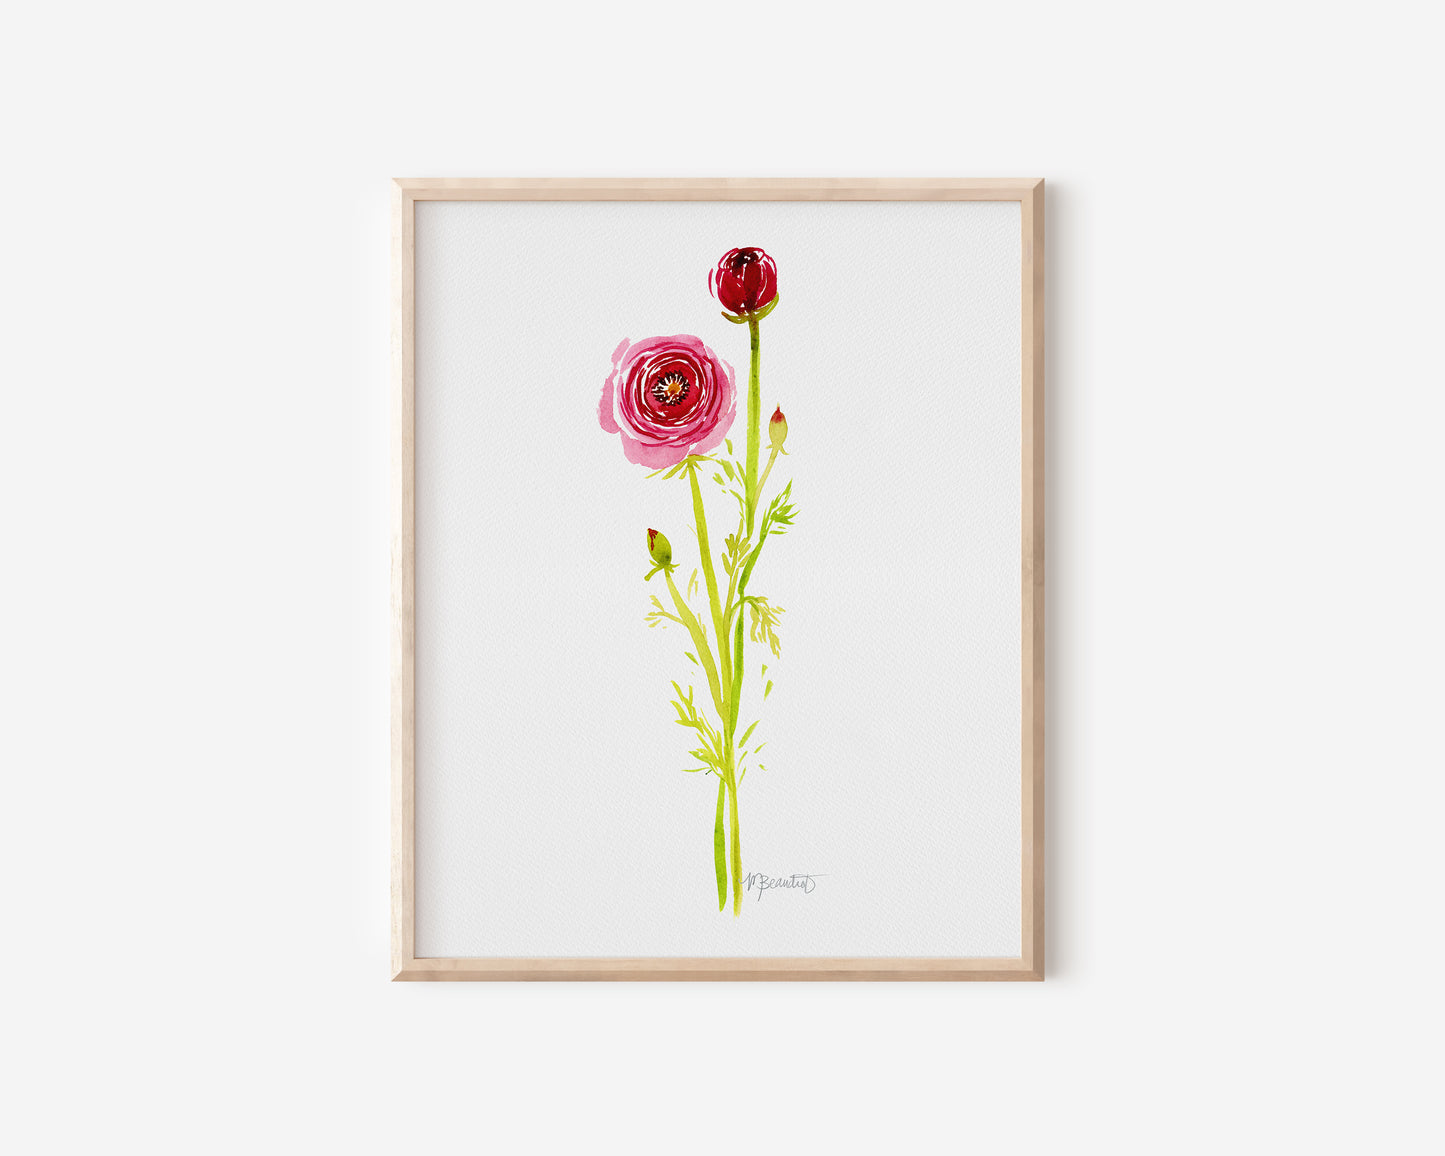 Ranunculus Flower Bundle: Set of 3 Prints